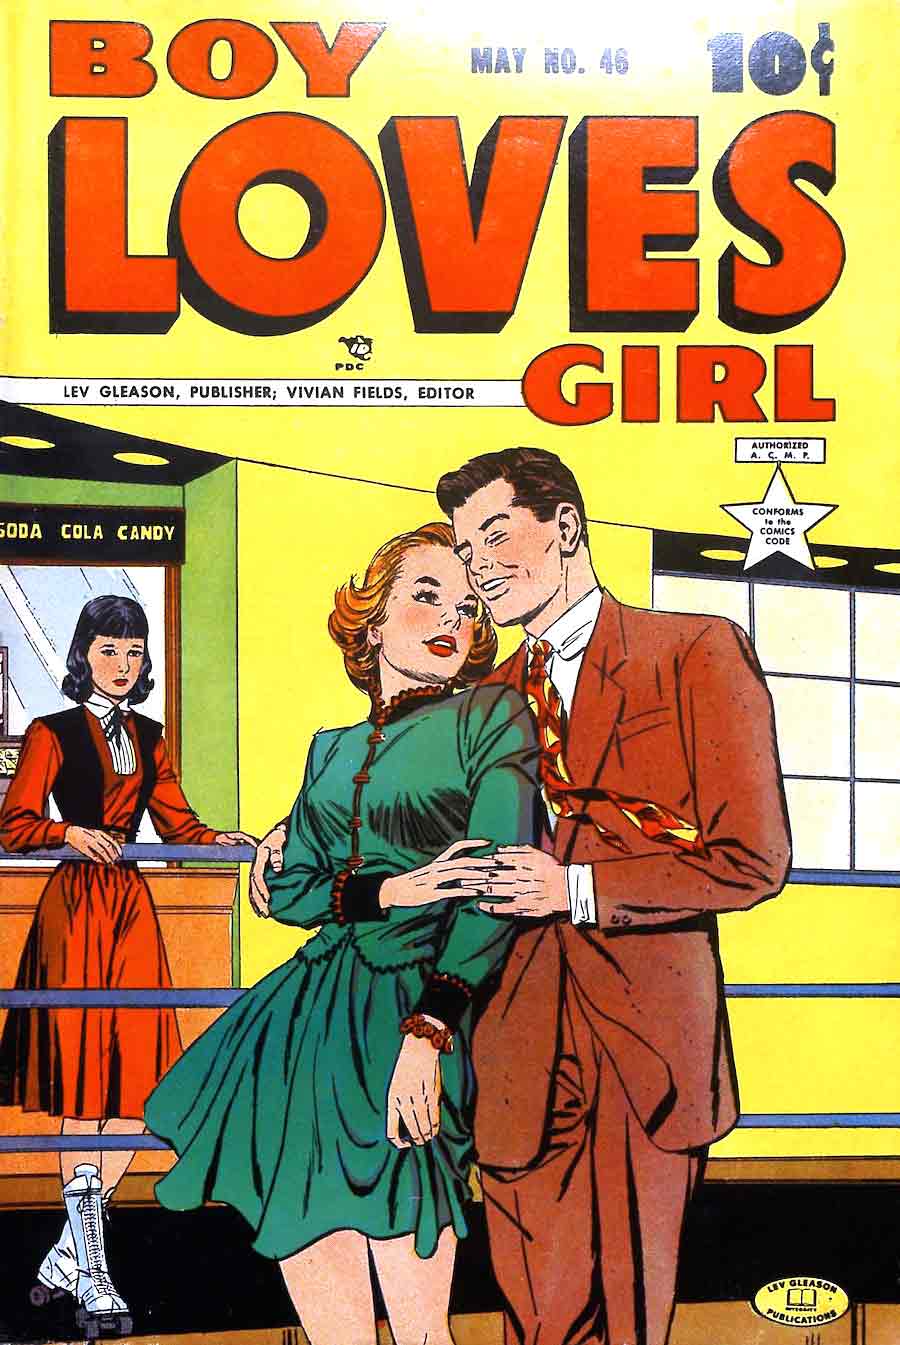 Boy Loves Girl #46 golden age 1950s romance comic book cover